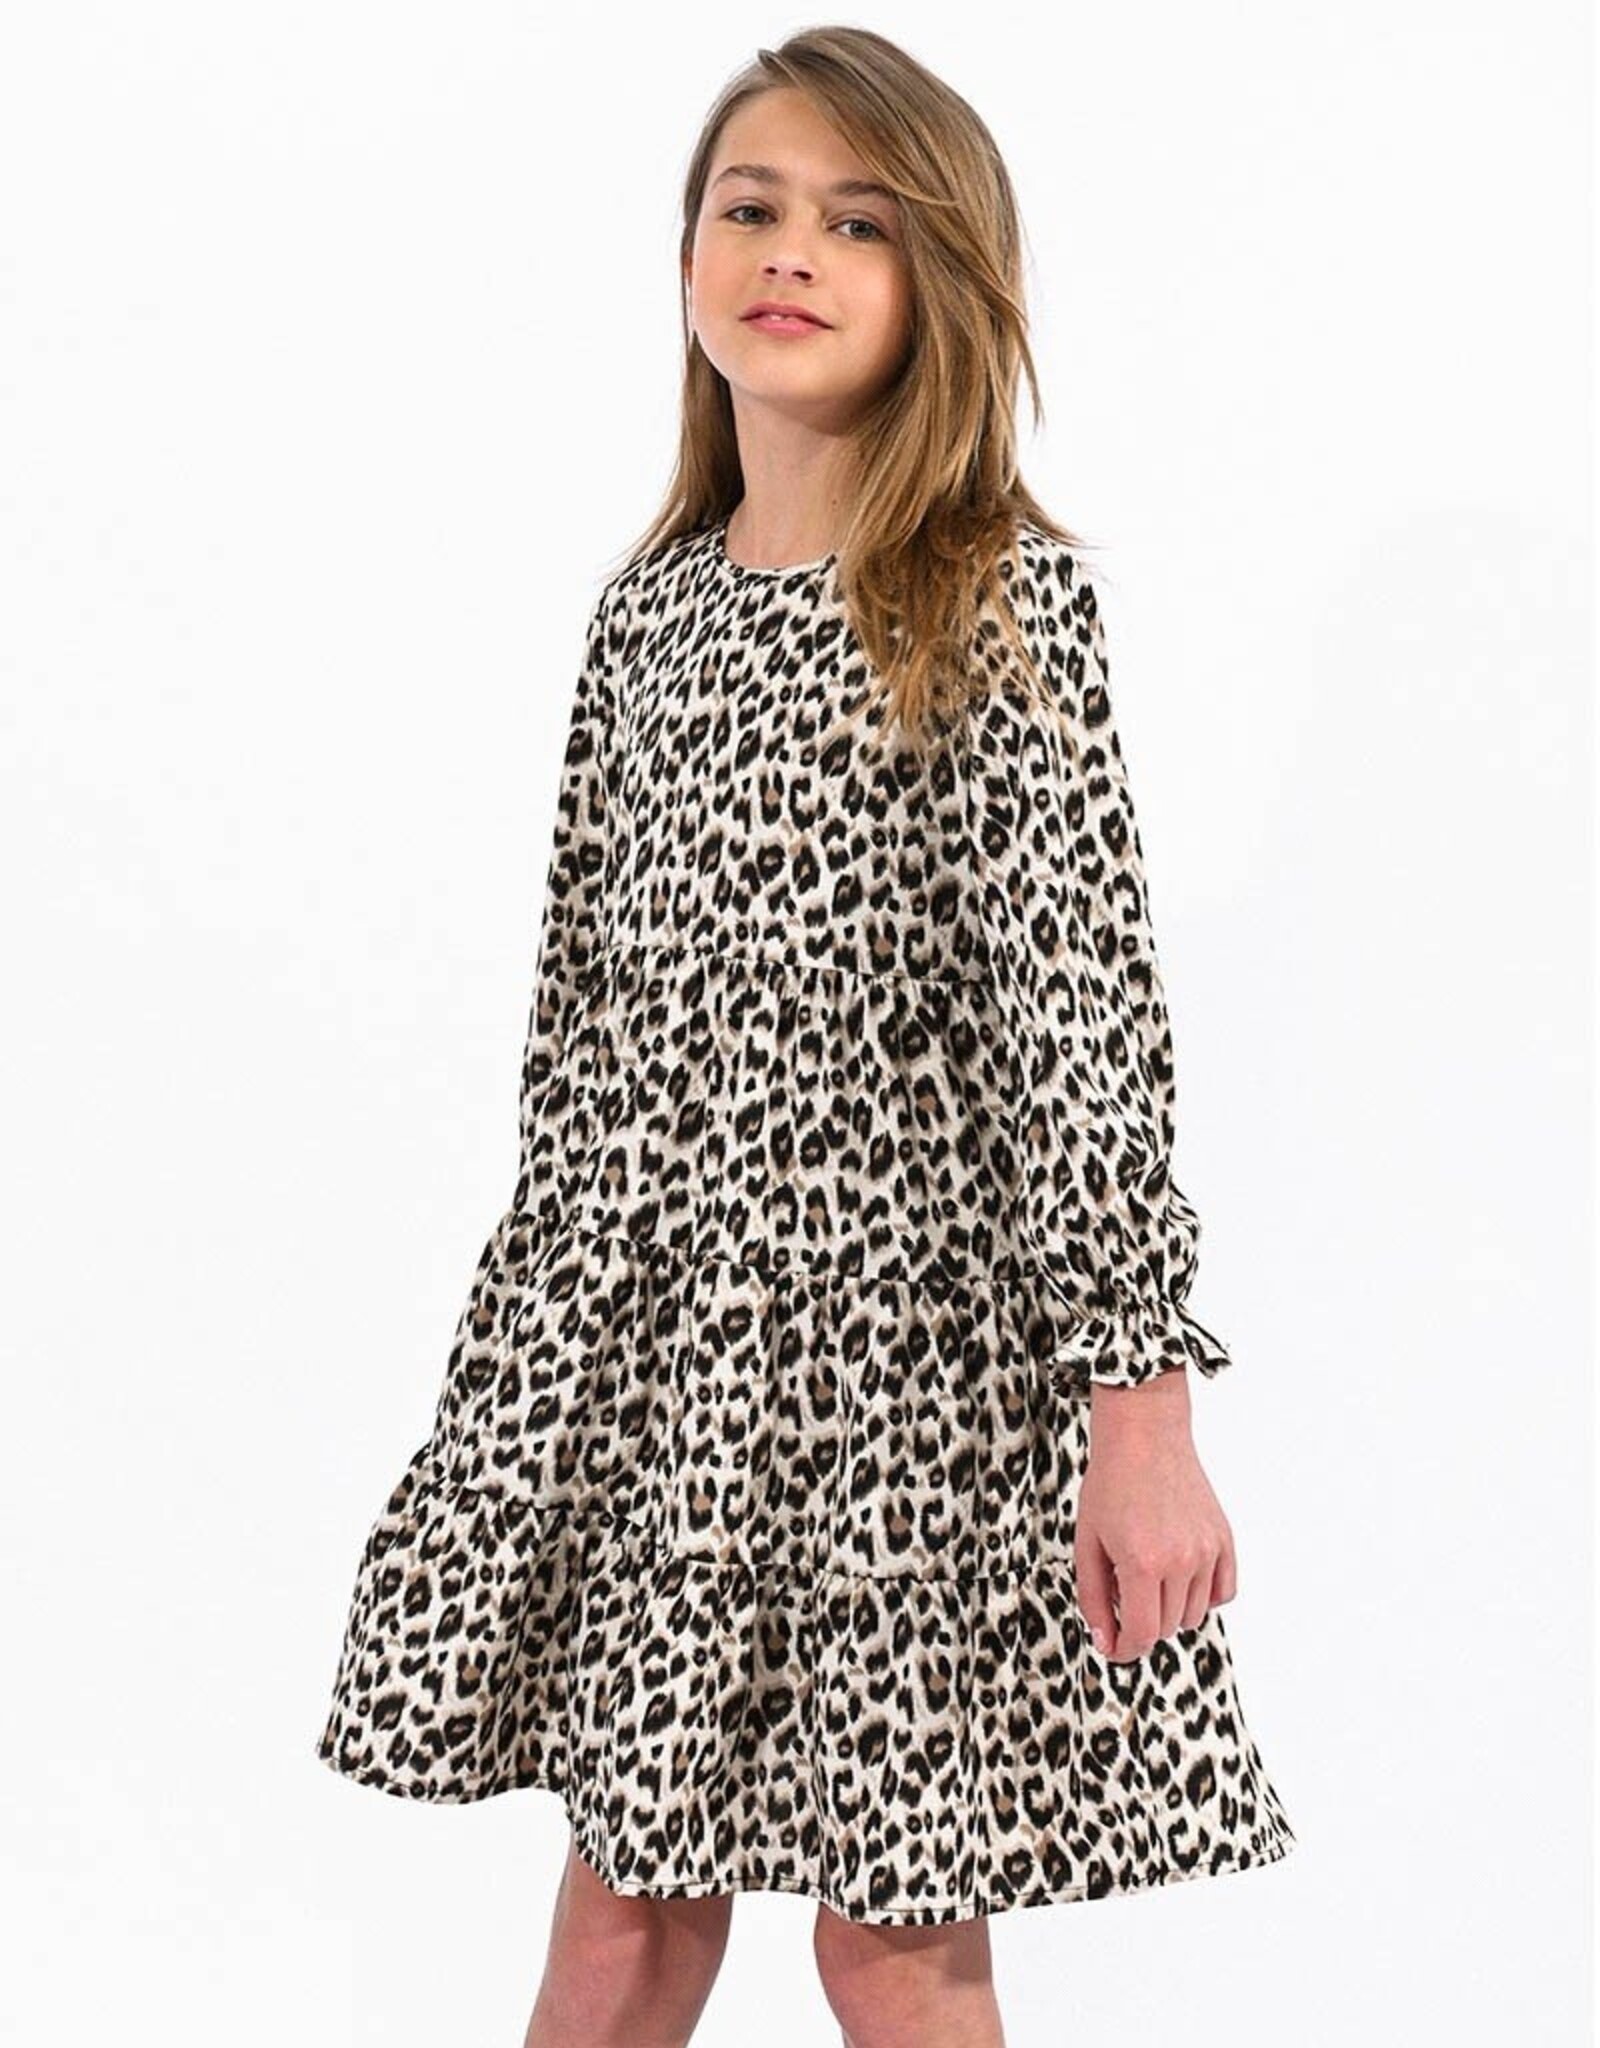 Molly Bracken FA23 G Leopard Print Dress